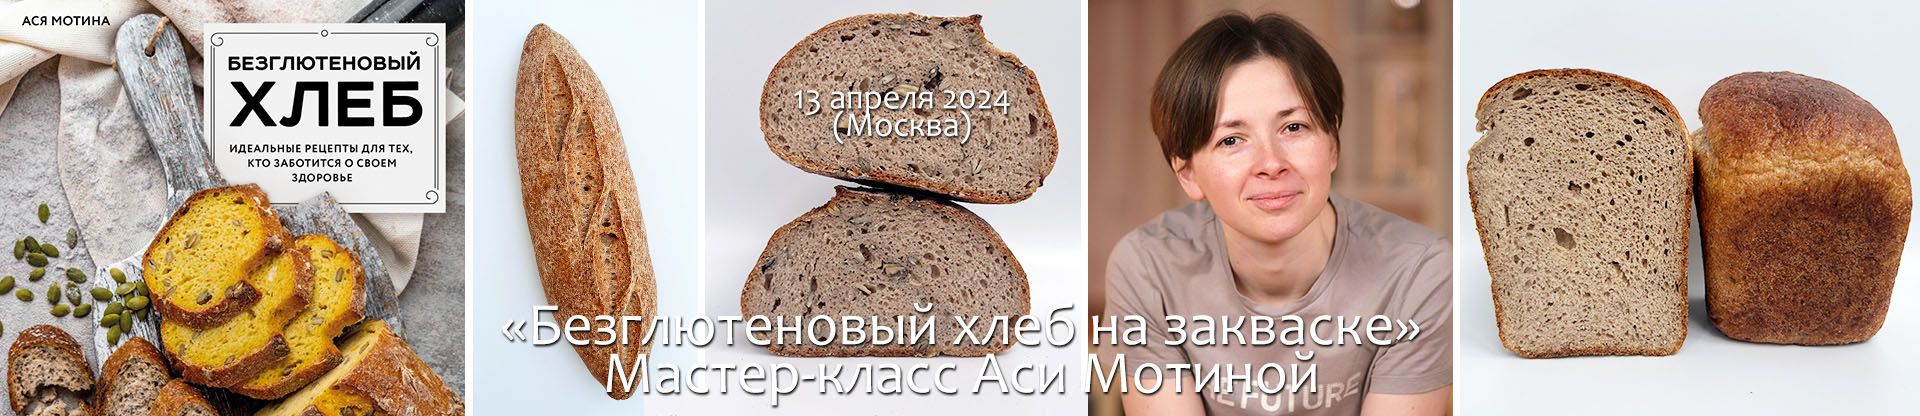 13 апреля 2024 мастер-класс Аси Мотиной по безглютеновому хлебу